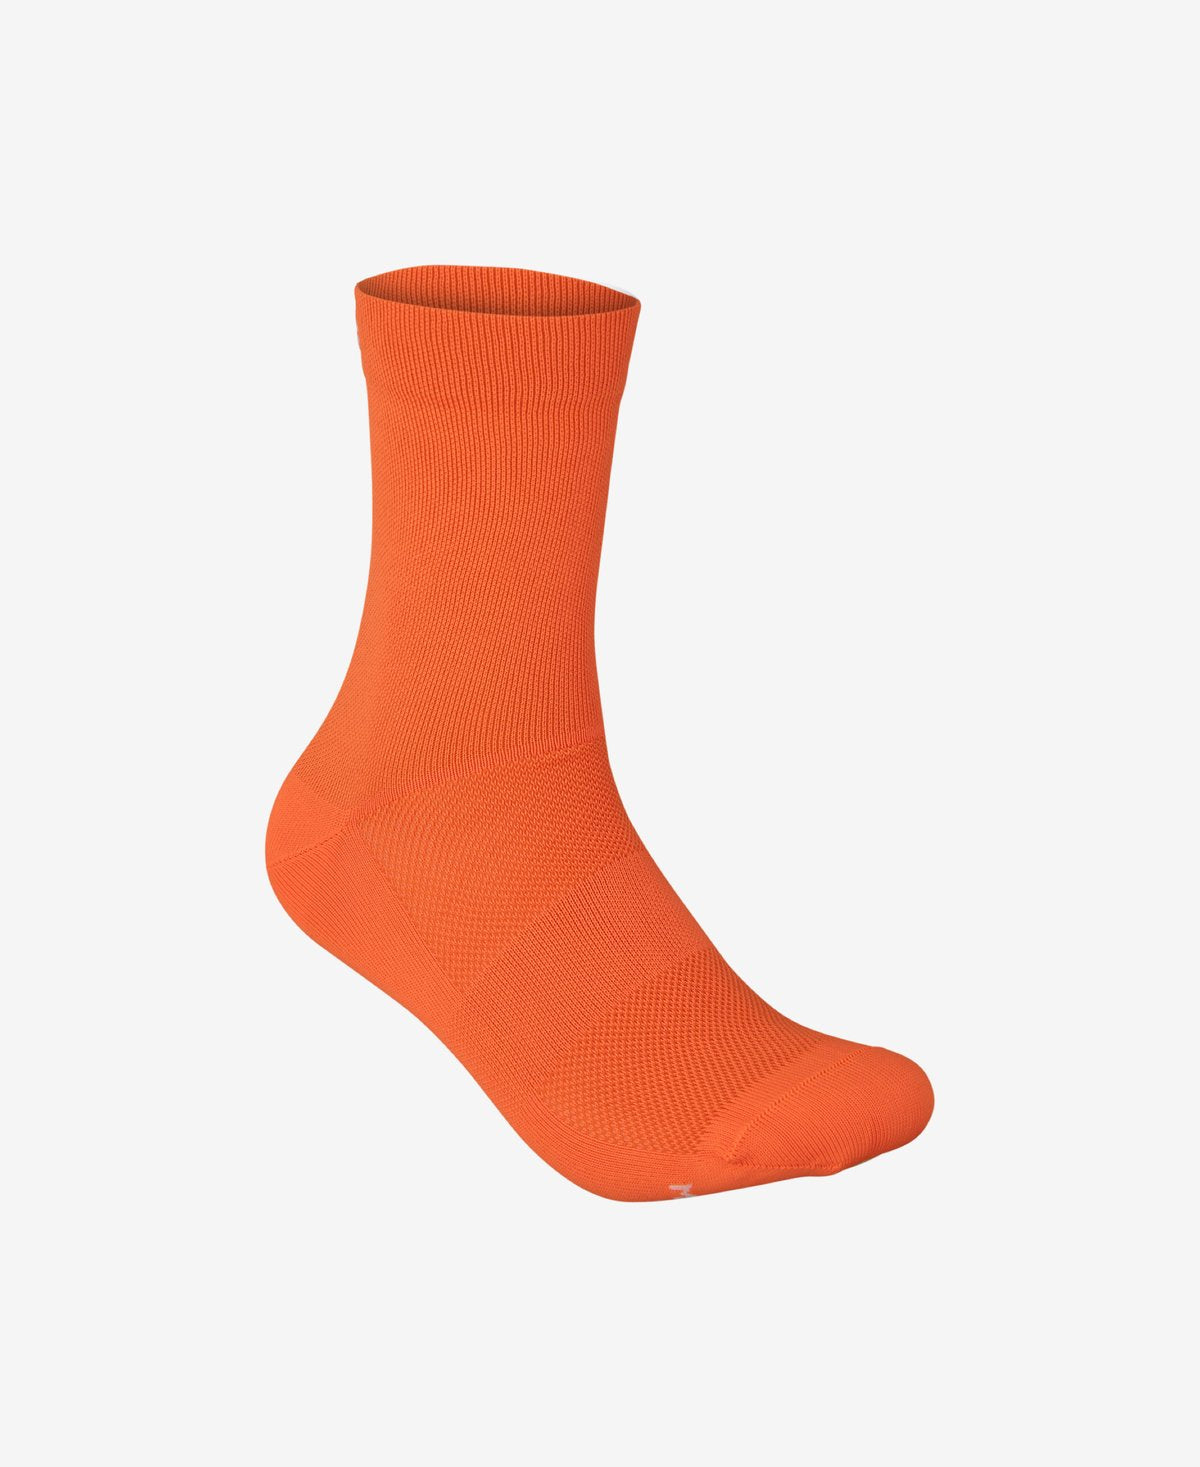 Fluo Sock - Fluorescent Orange - Medium Size